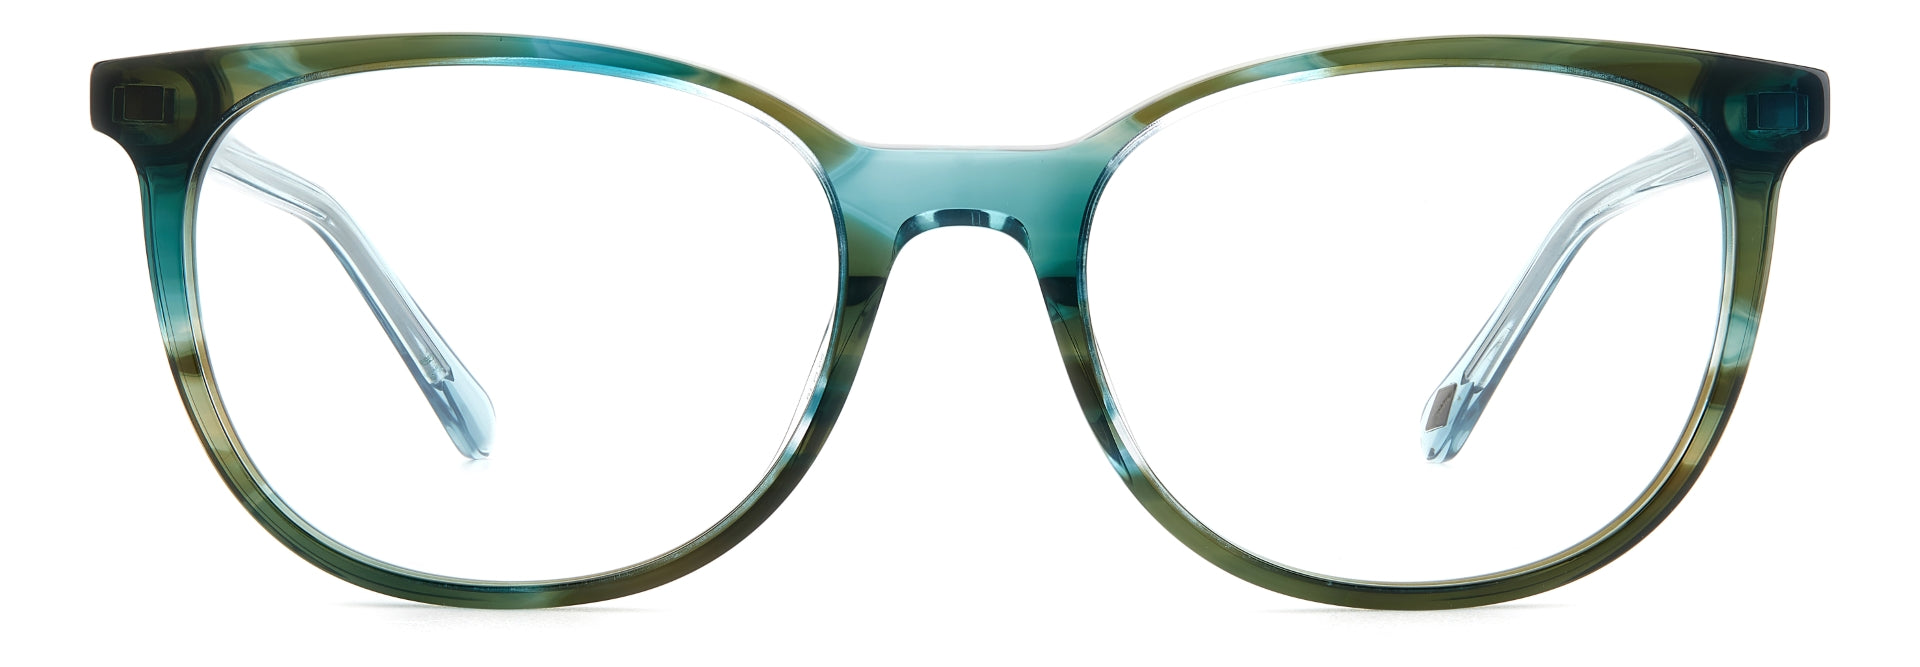 FOSSIL WOMEN ROUND Eyeglasses-FOS 7143 S53